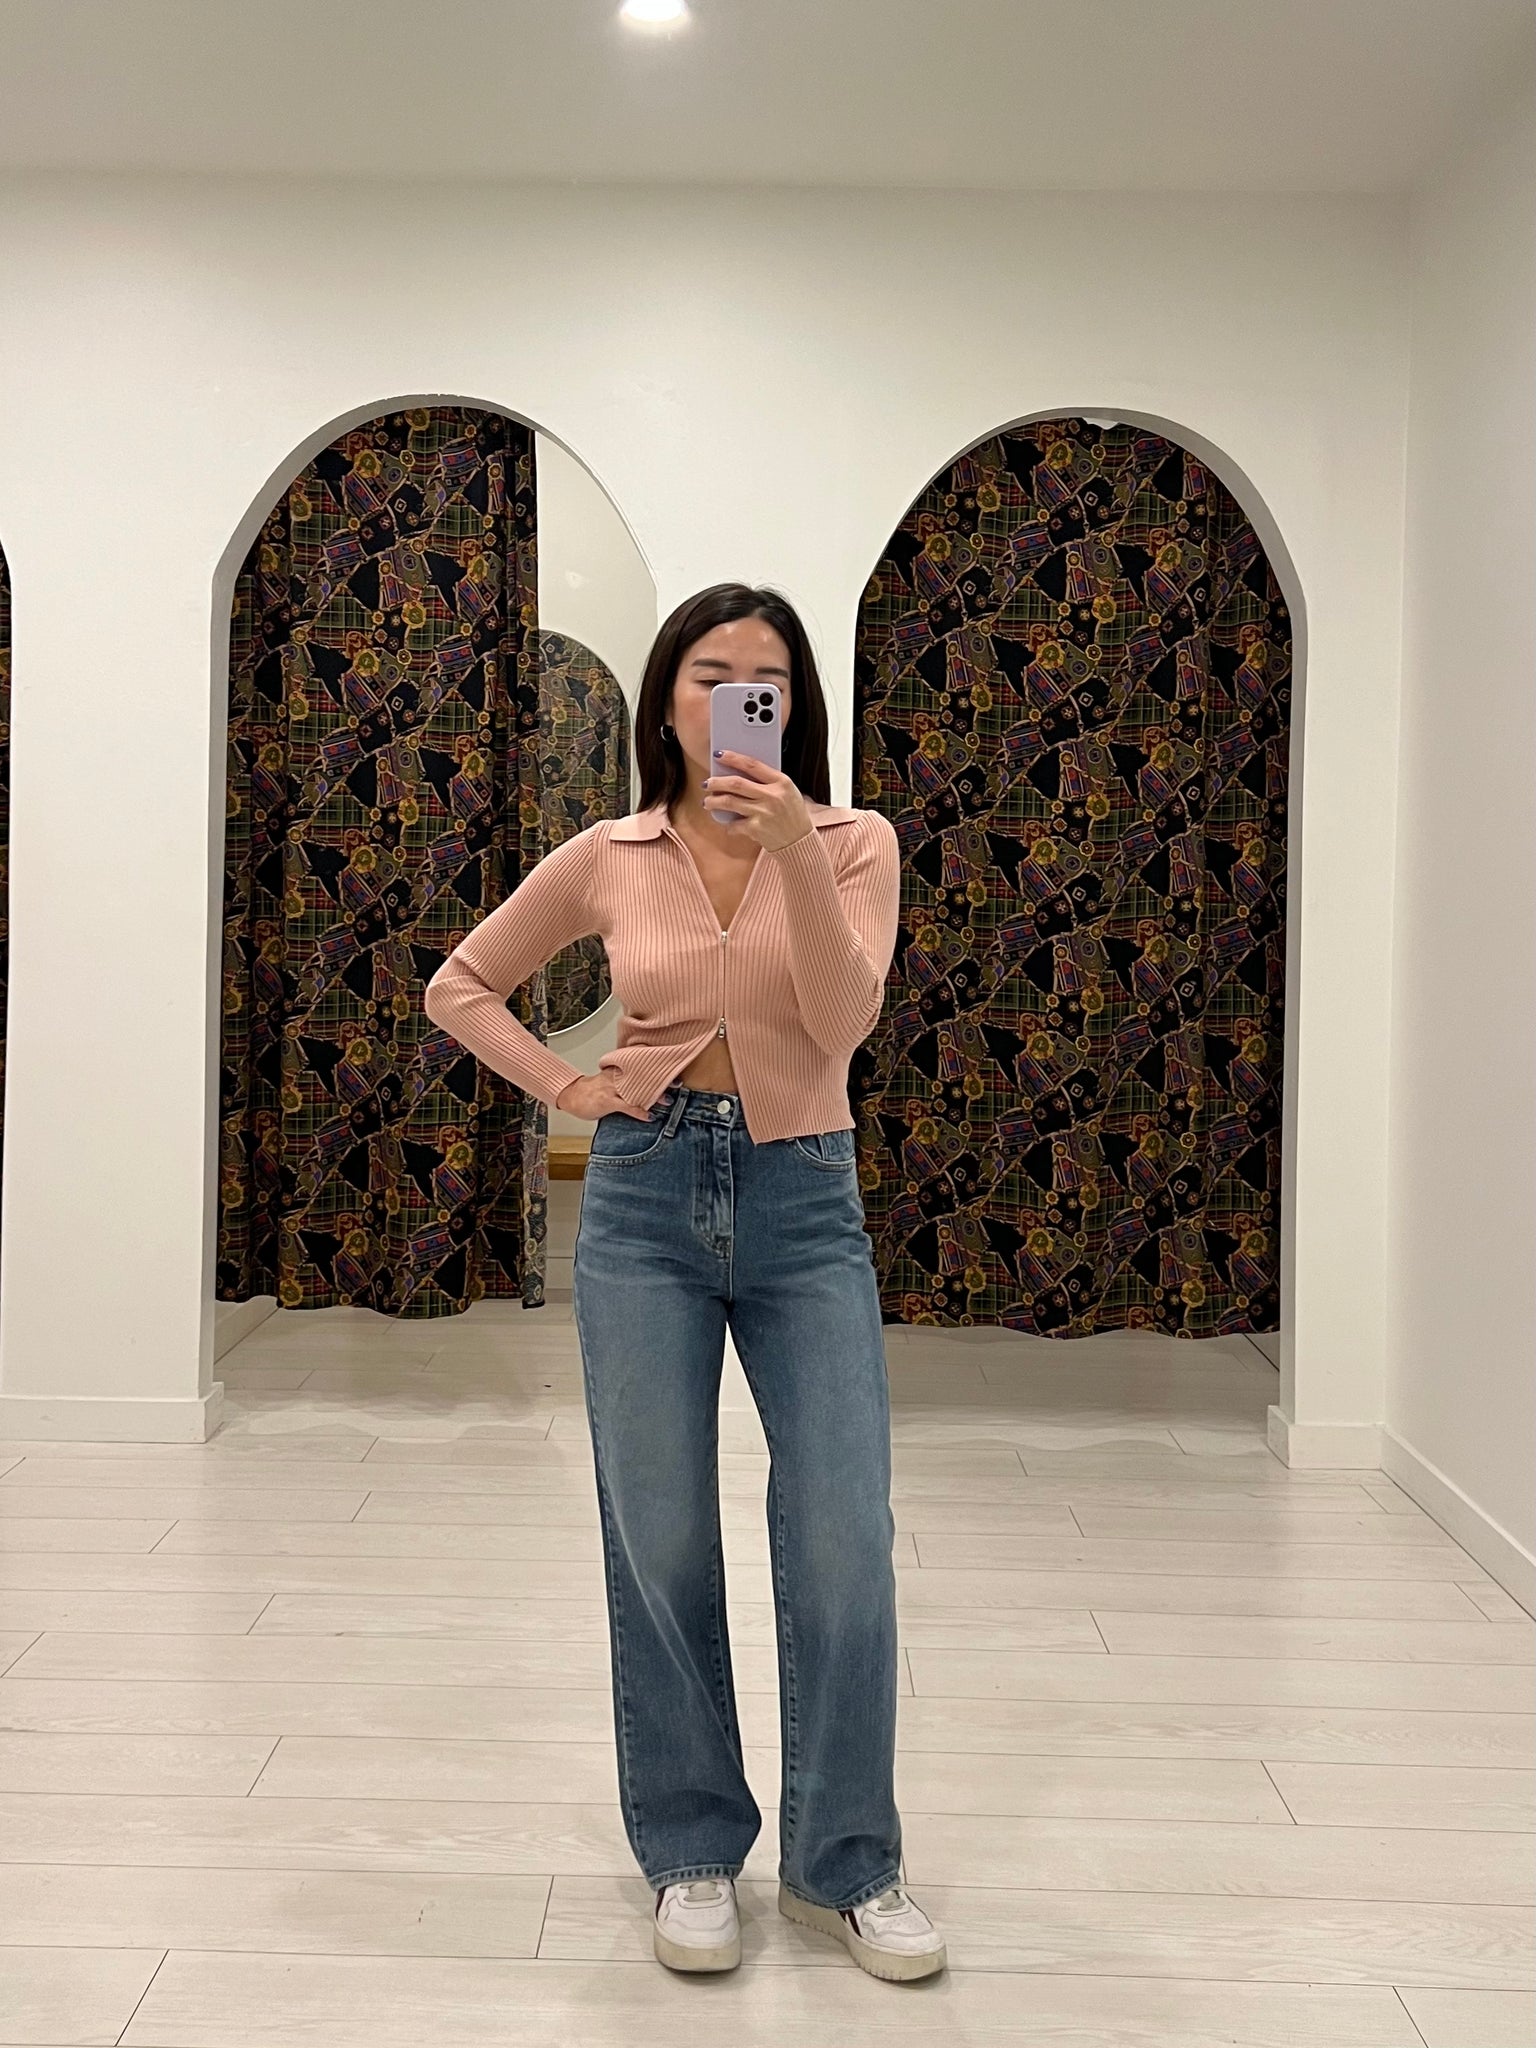 DIKO Straight legged jeans